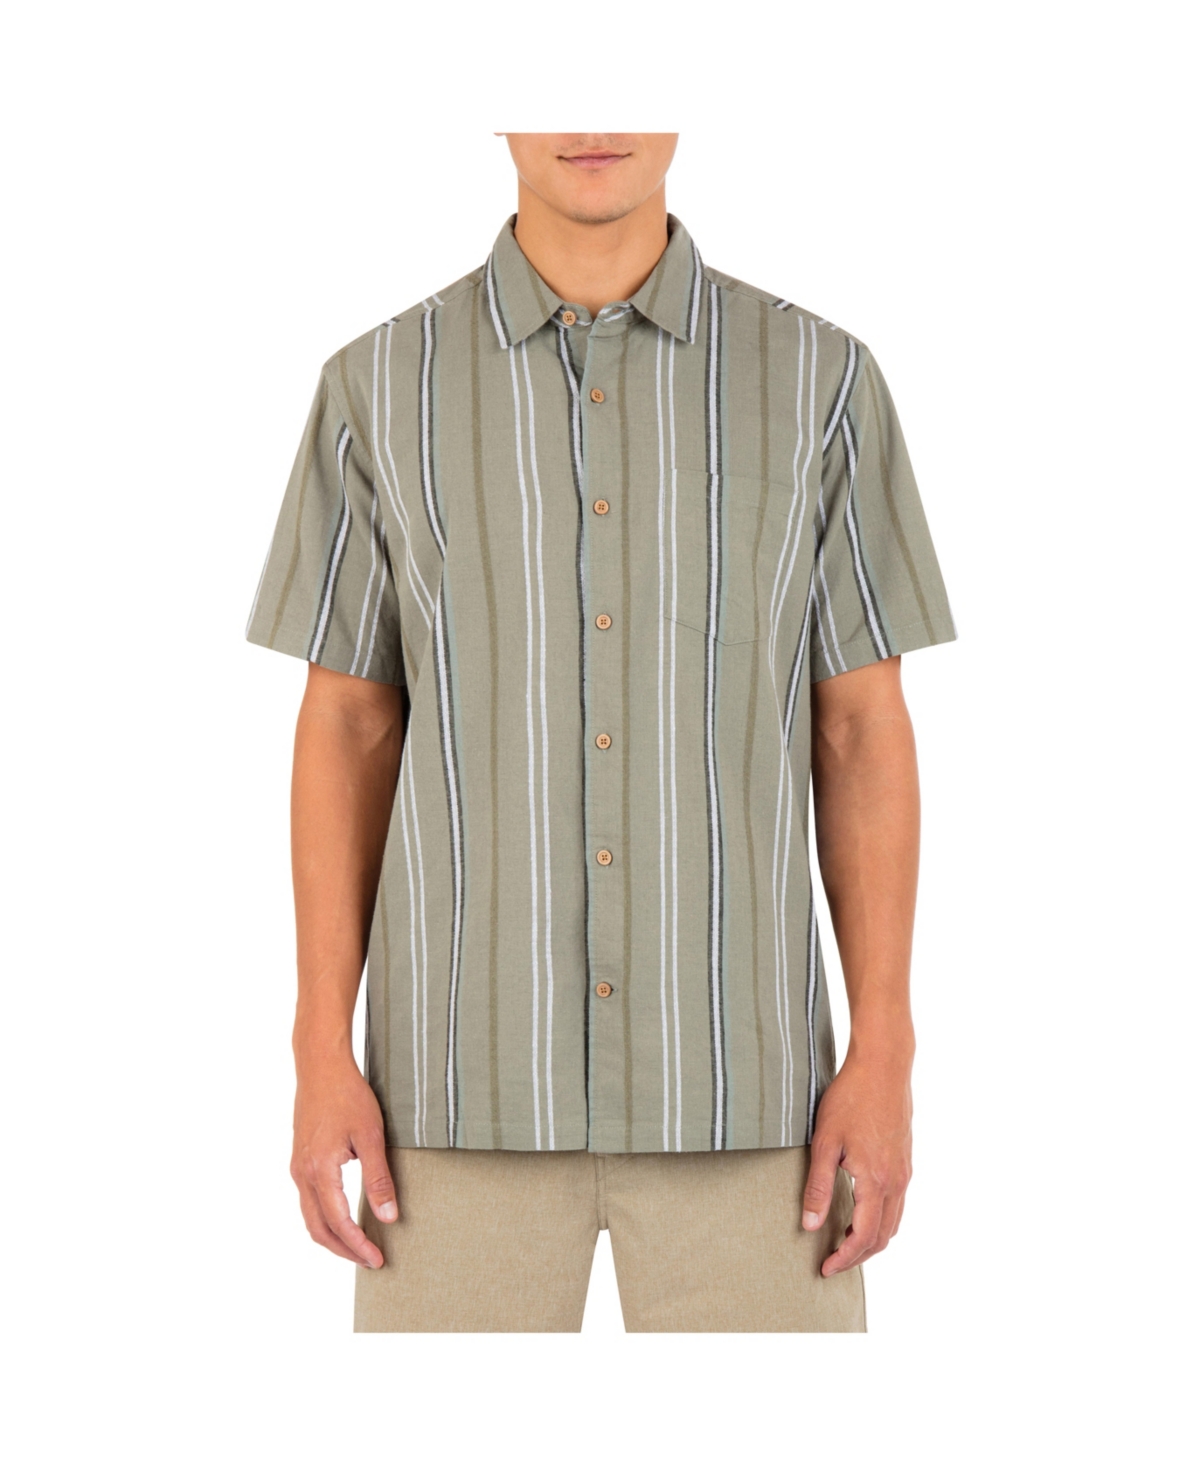 Men's Rincon Linen Short Sleeves Shirt - Army